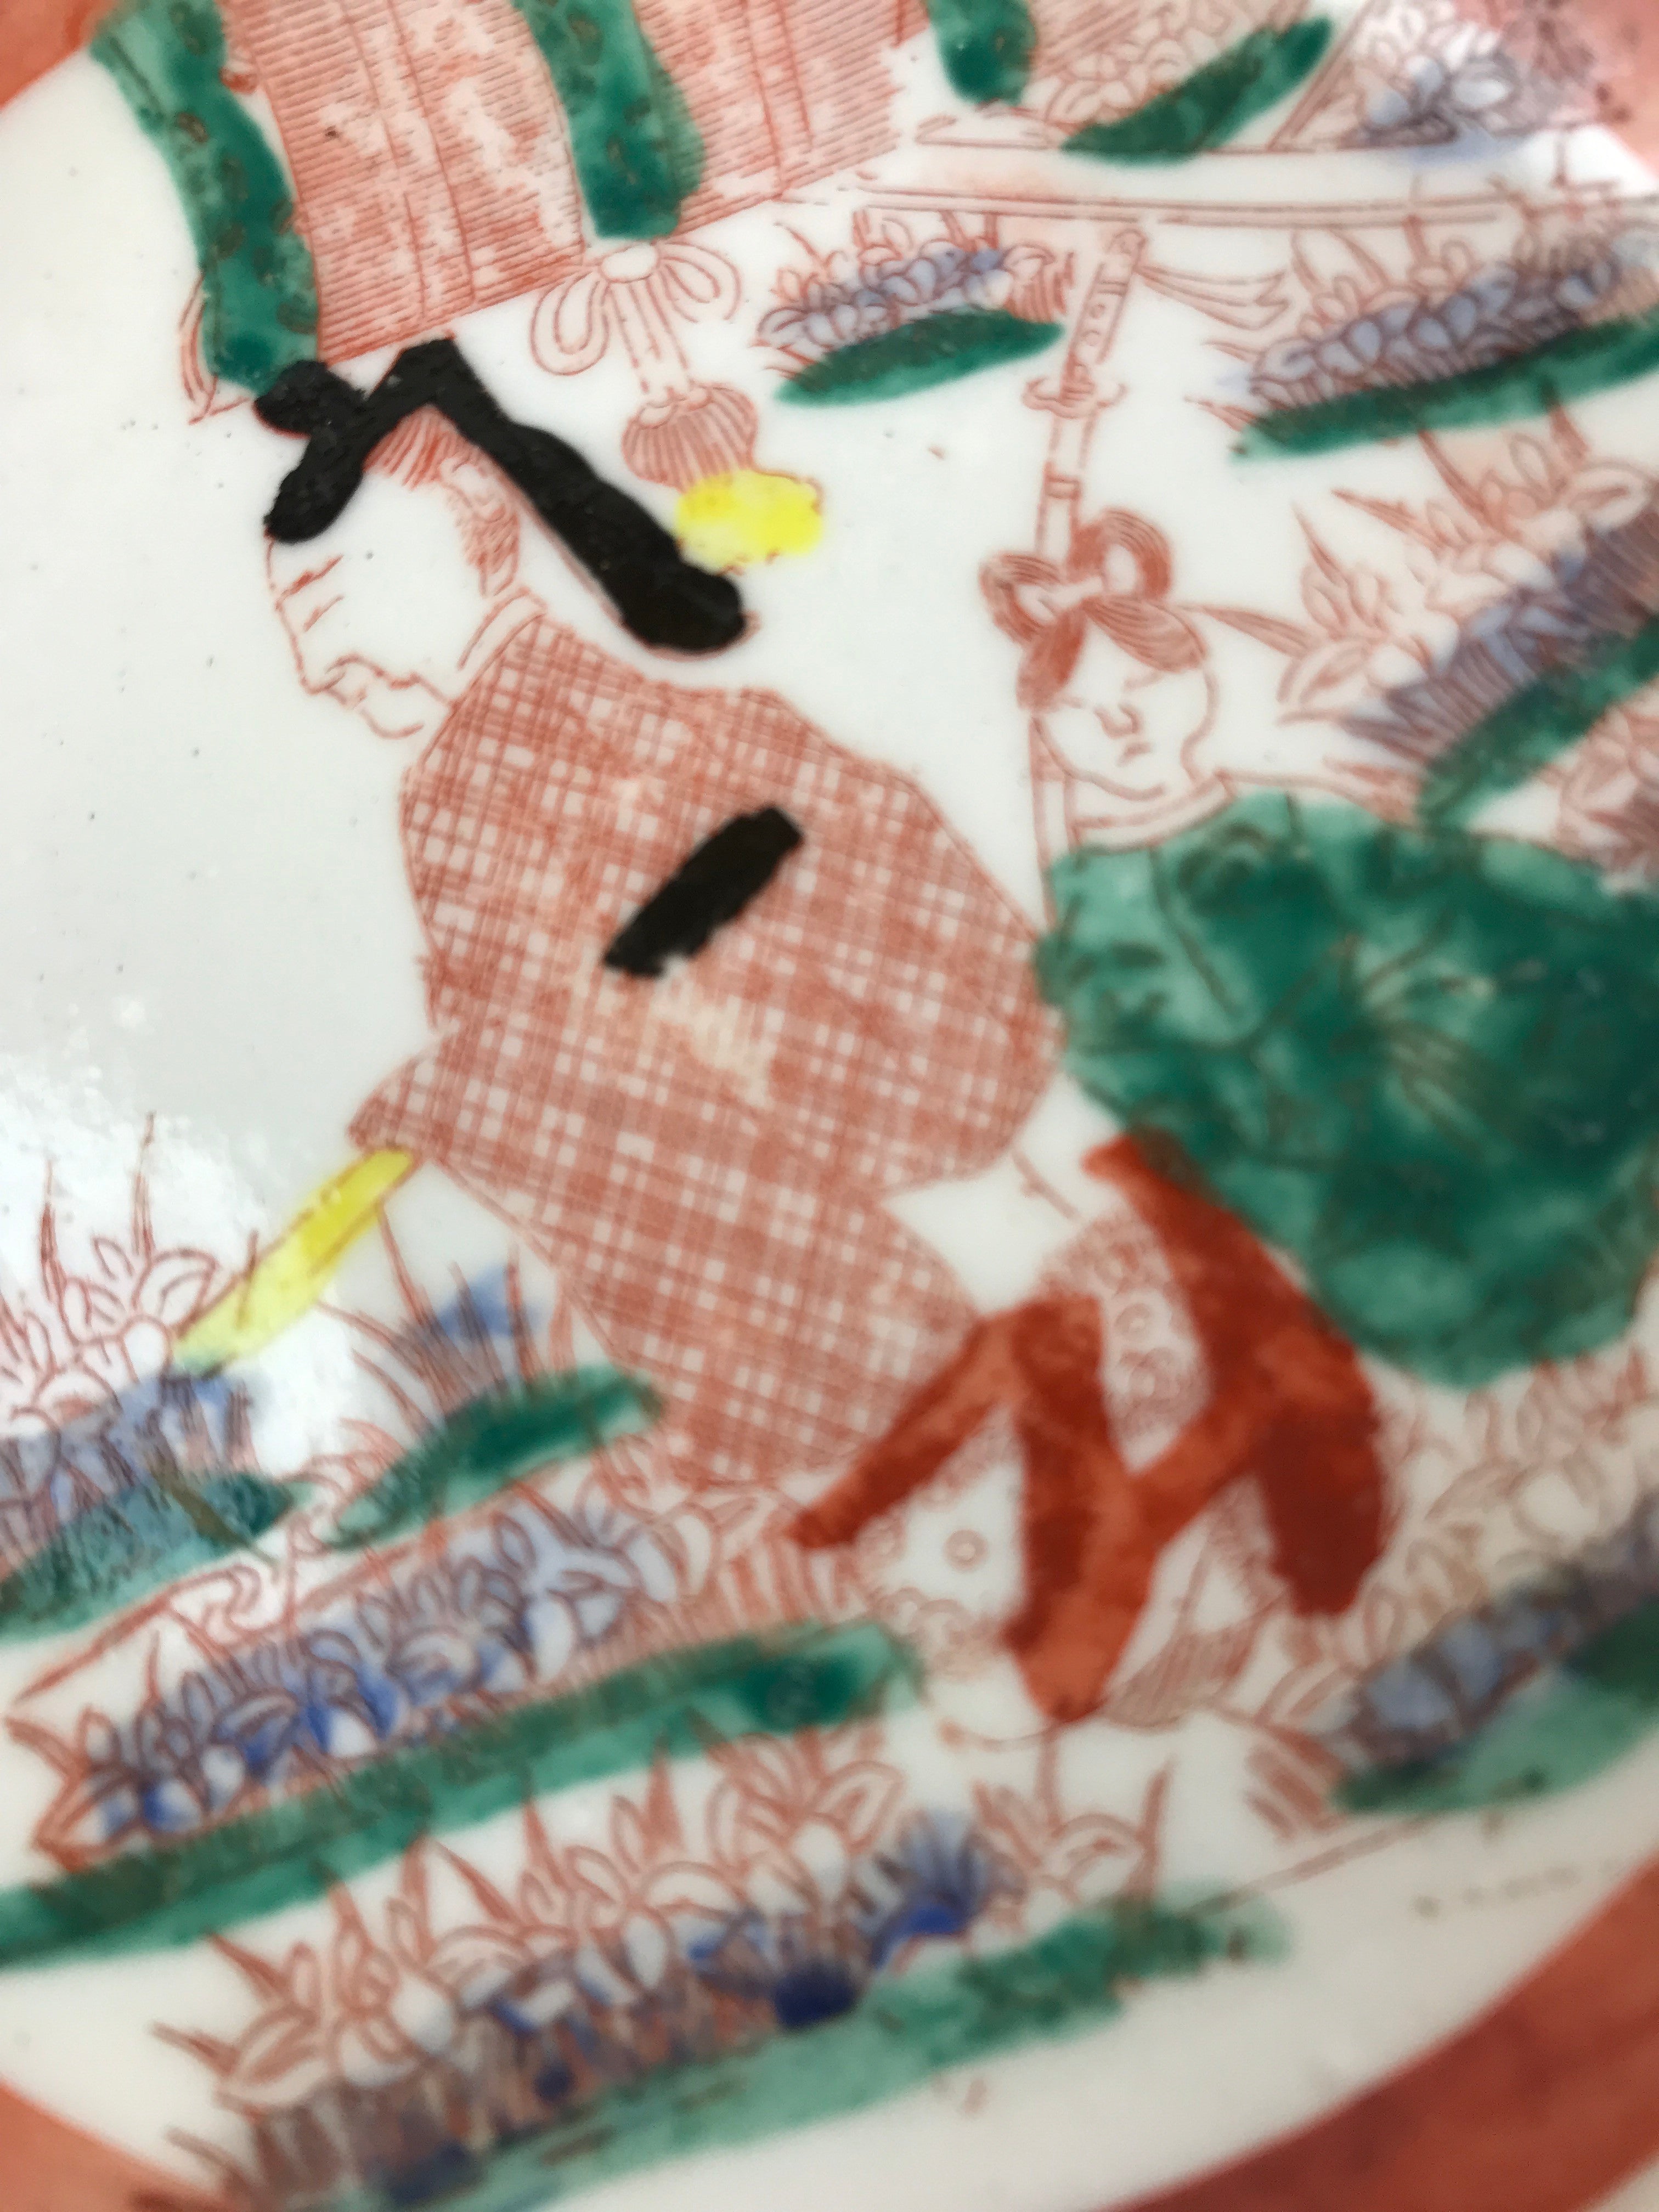 Antique Japanese Ceramic Plate Imari Akae Man Woman Garden Red Green PY614